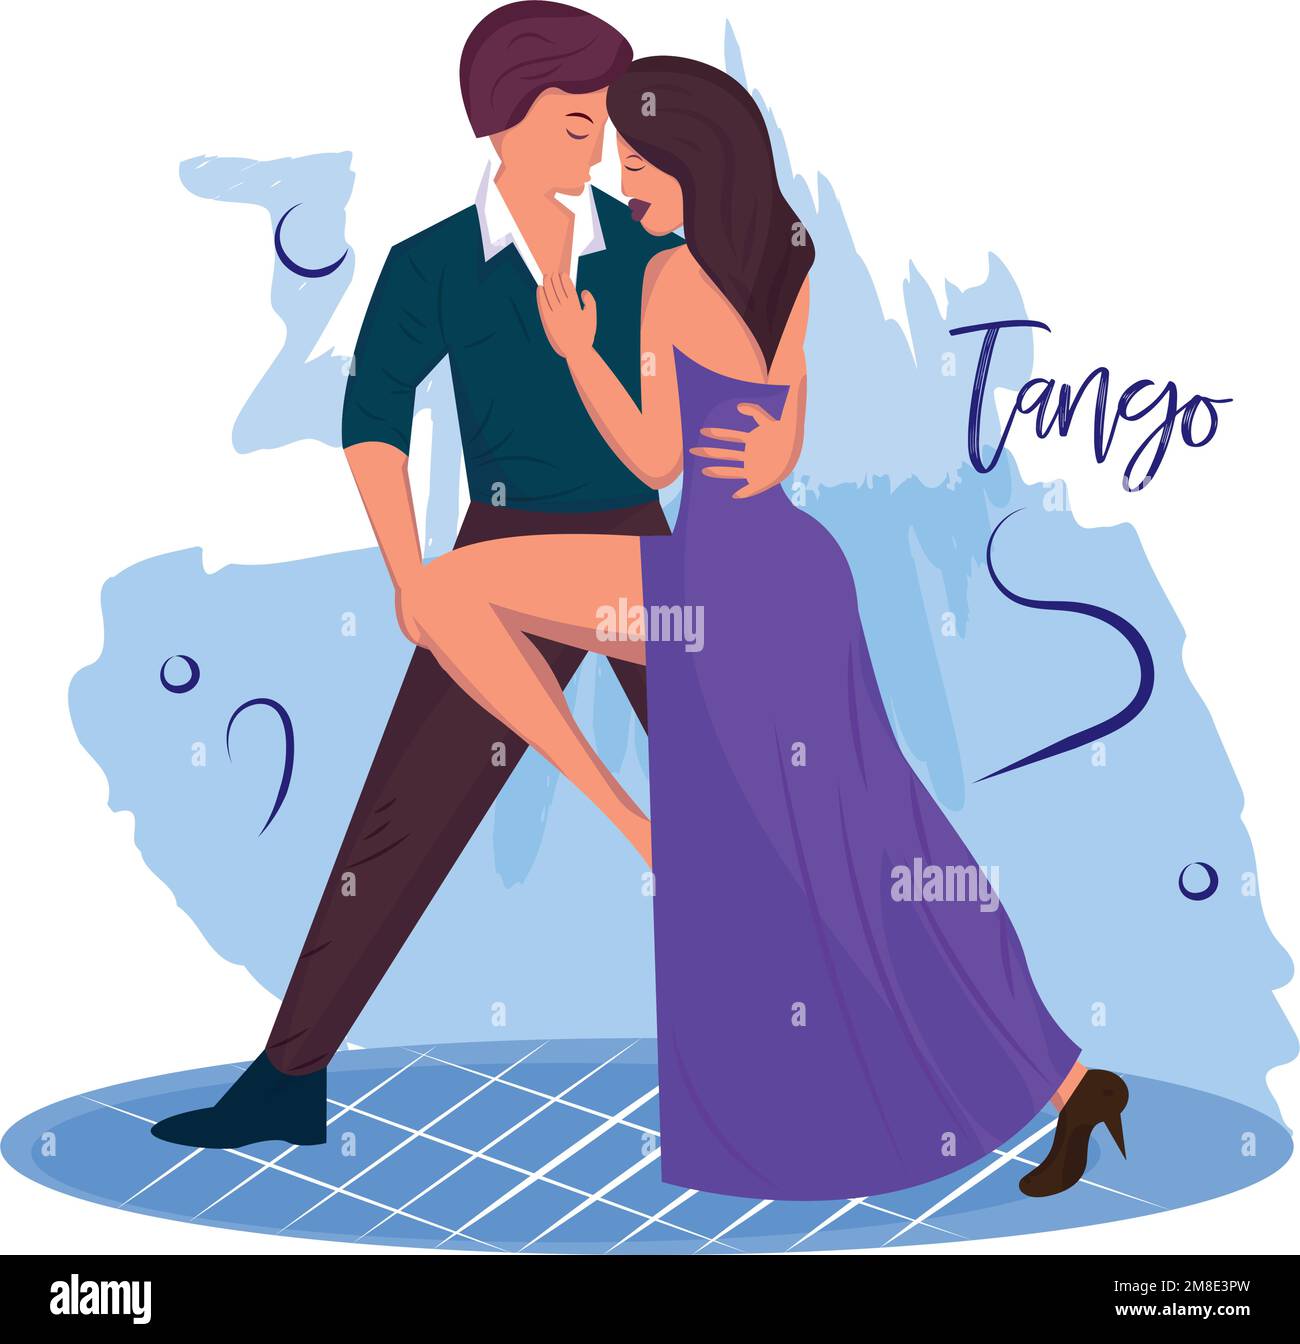 Isoliertes Tango-Tanzpaar Argentinisches Kulturvektor Stock Vektor